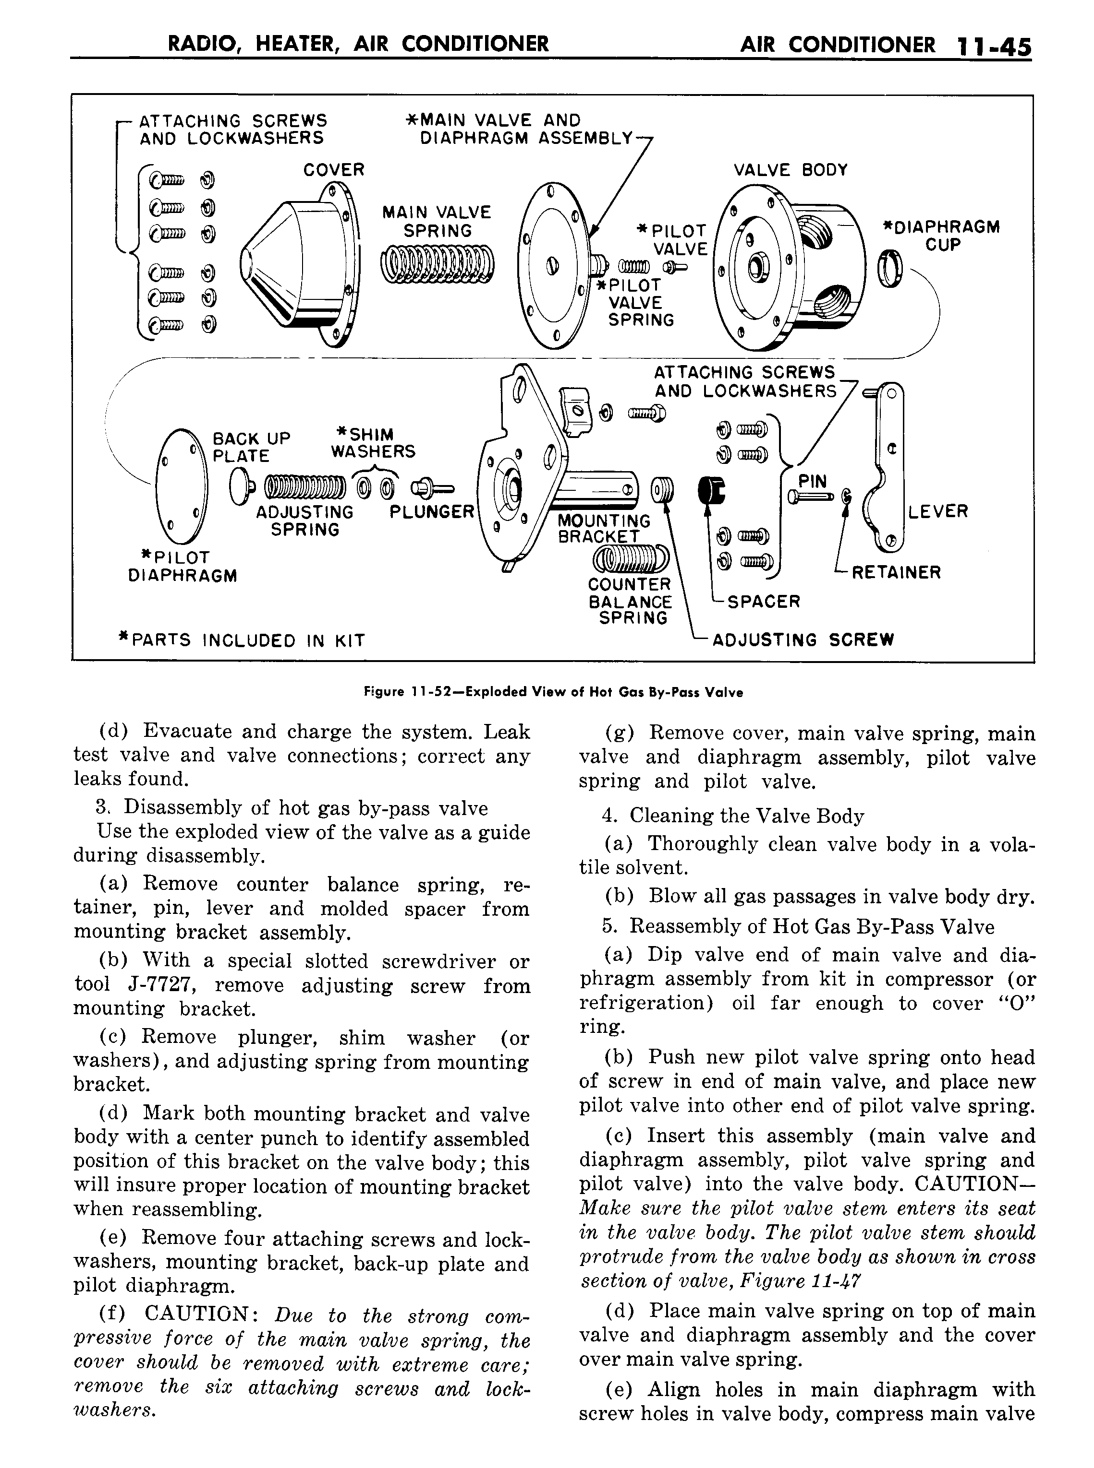 n_12 1960 Buick Shop Manual - Radio-Heater-AC-045-045.jpg